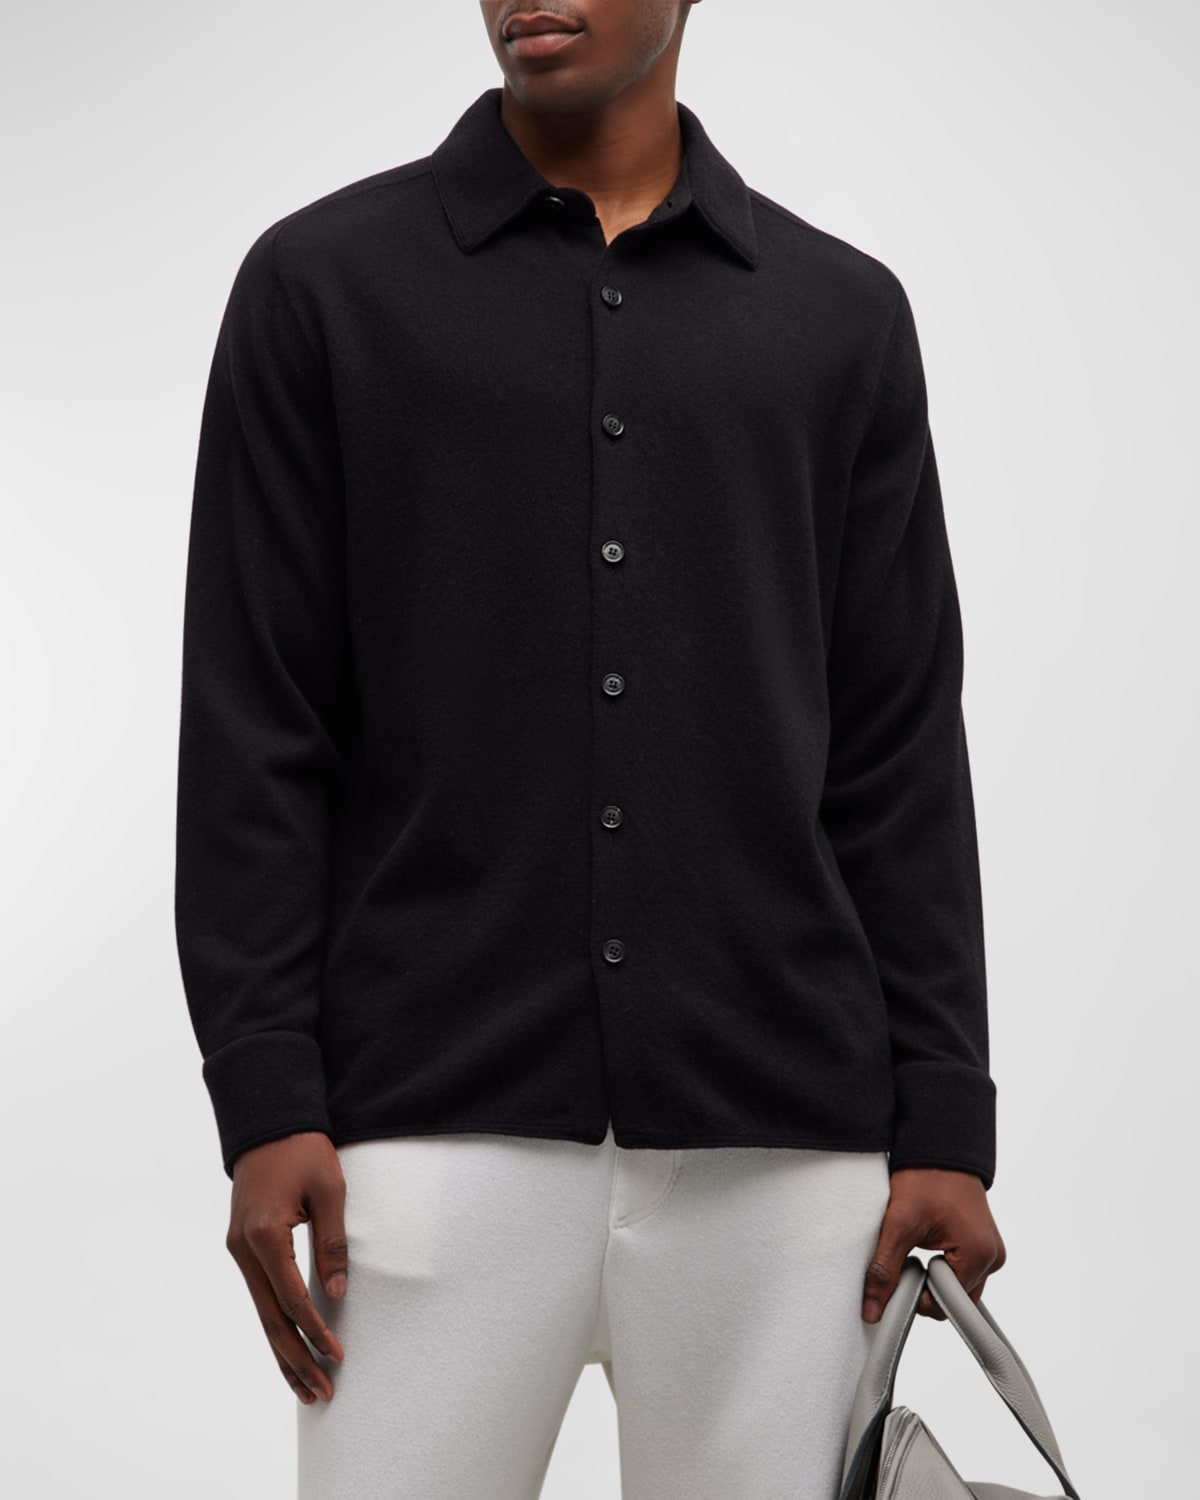 Zegna Men's Cotton-cashmere Sport Shirt In Black Solid